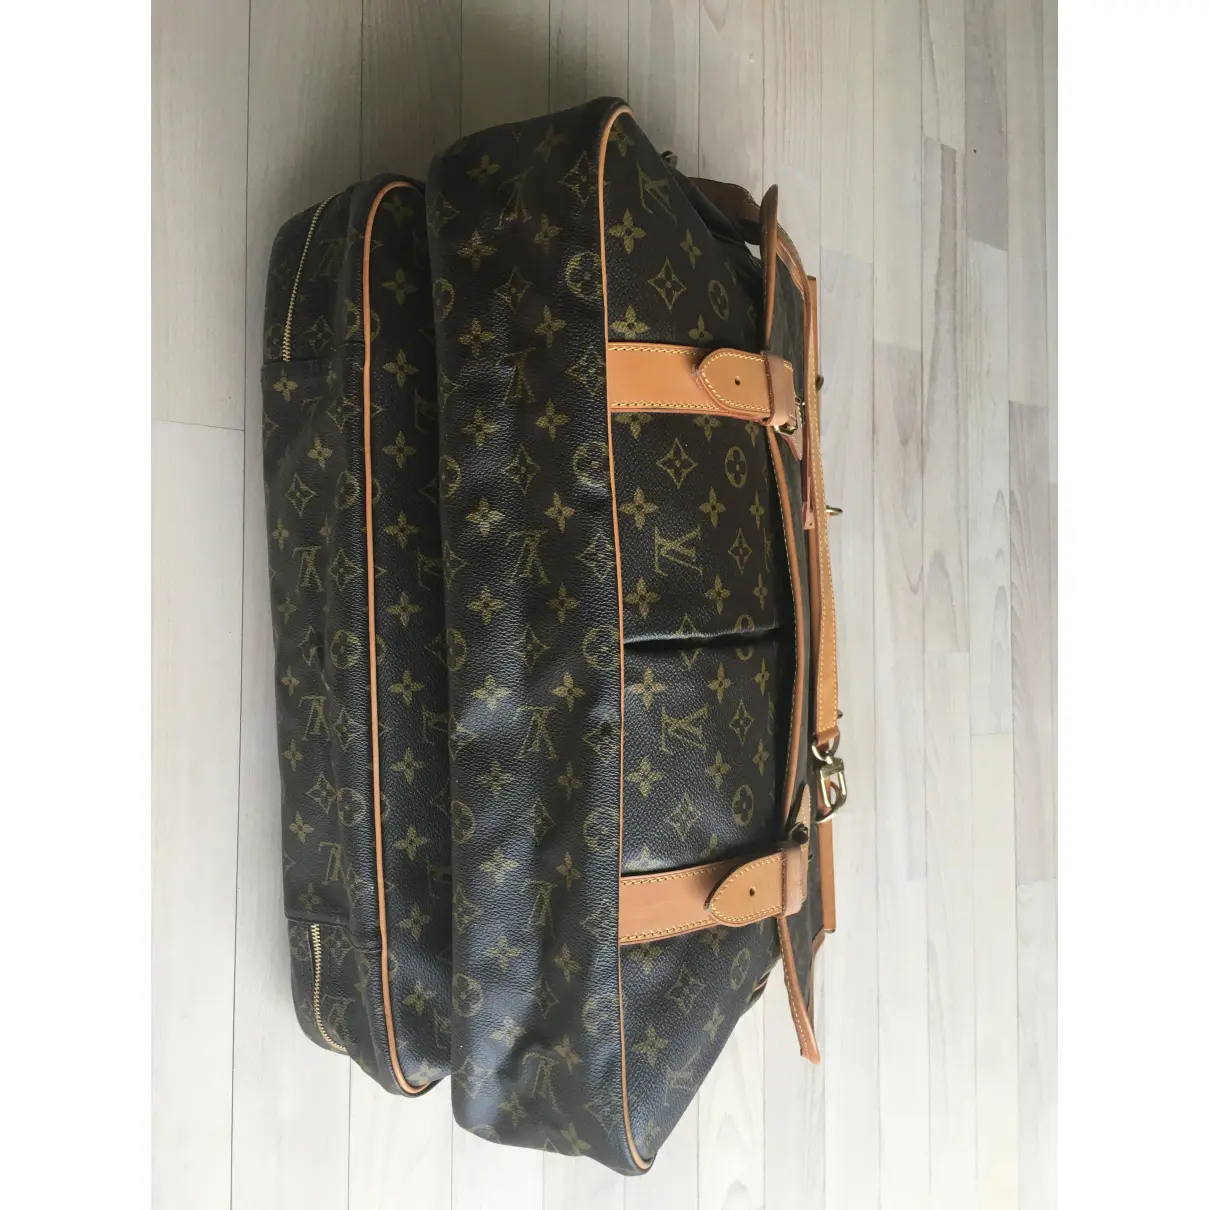 Buy Louis Vuitton Chasse cloth travel bag online - Vintage